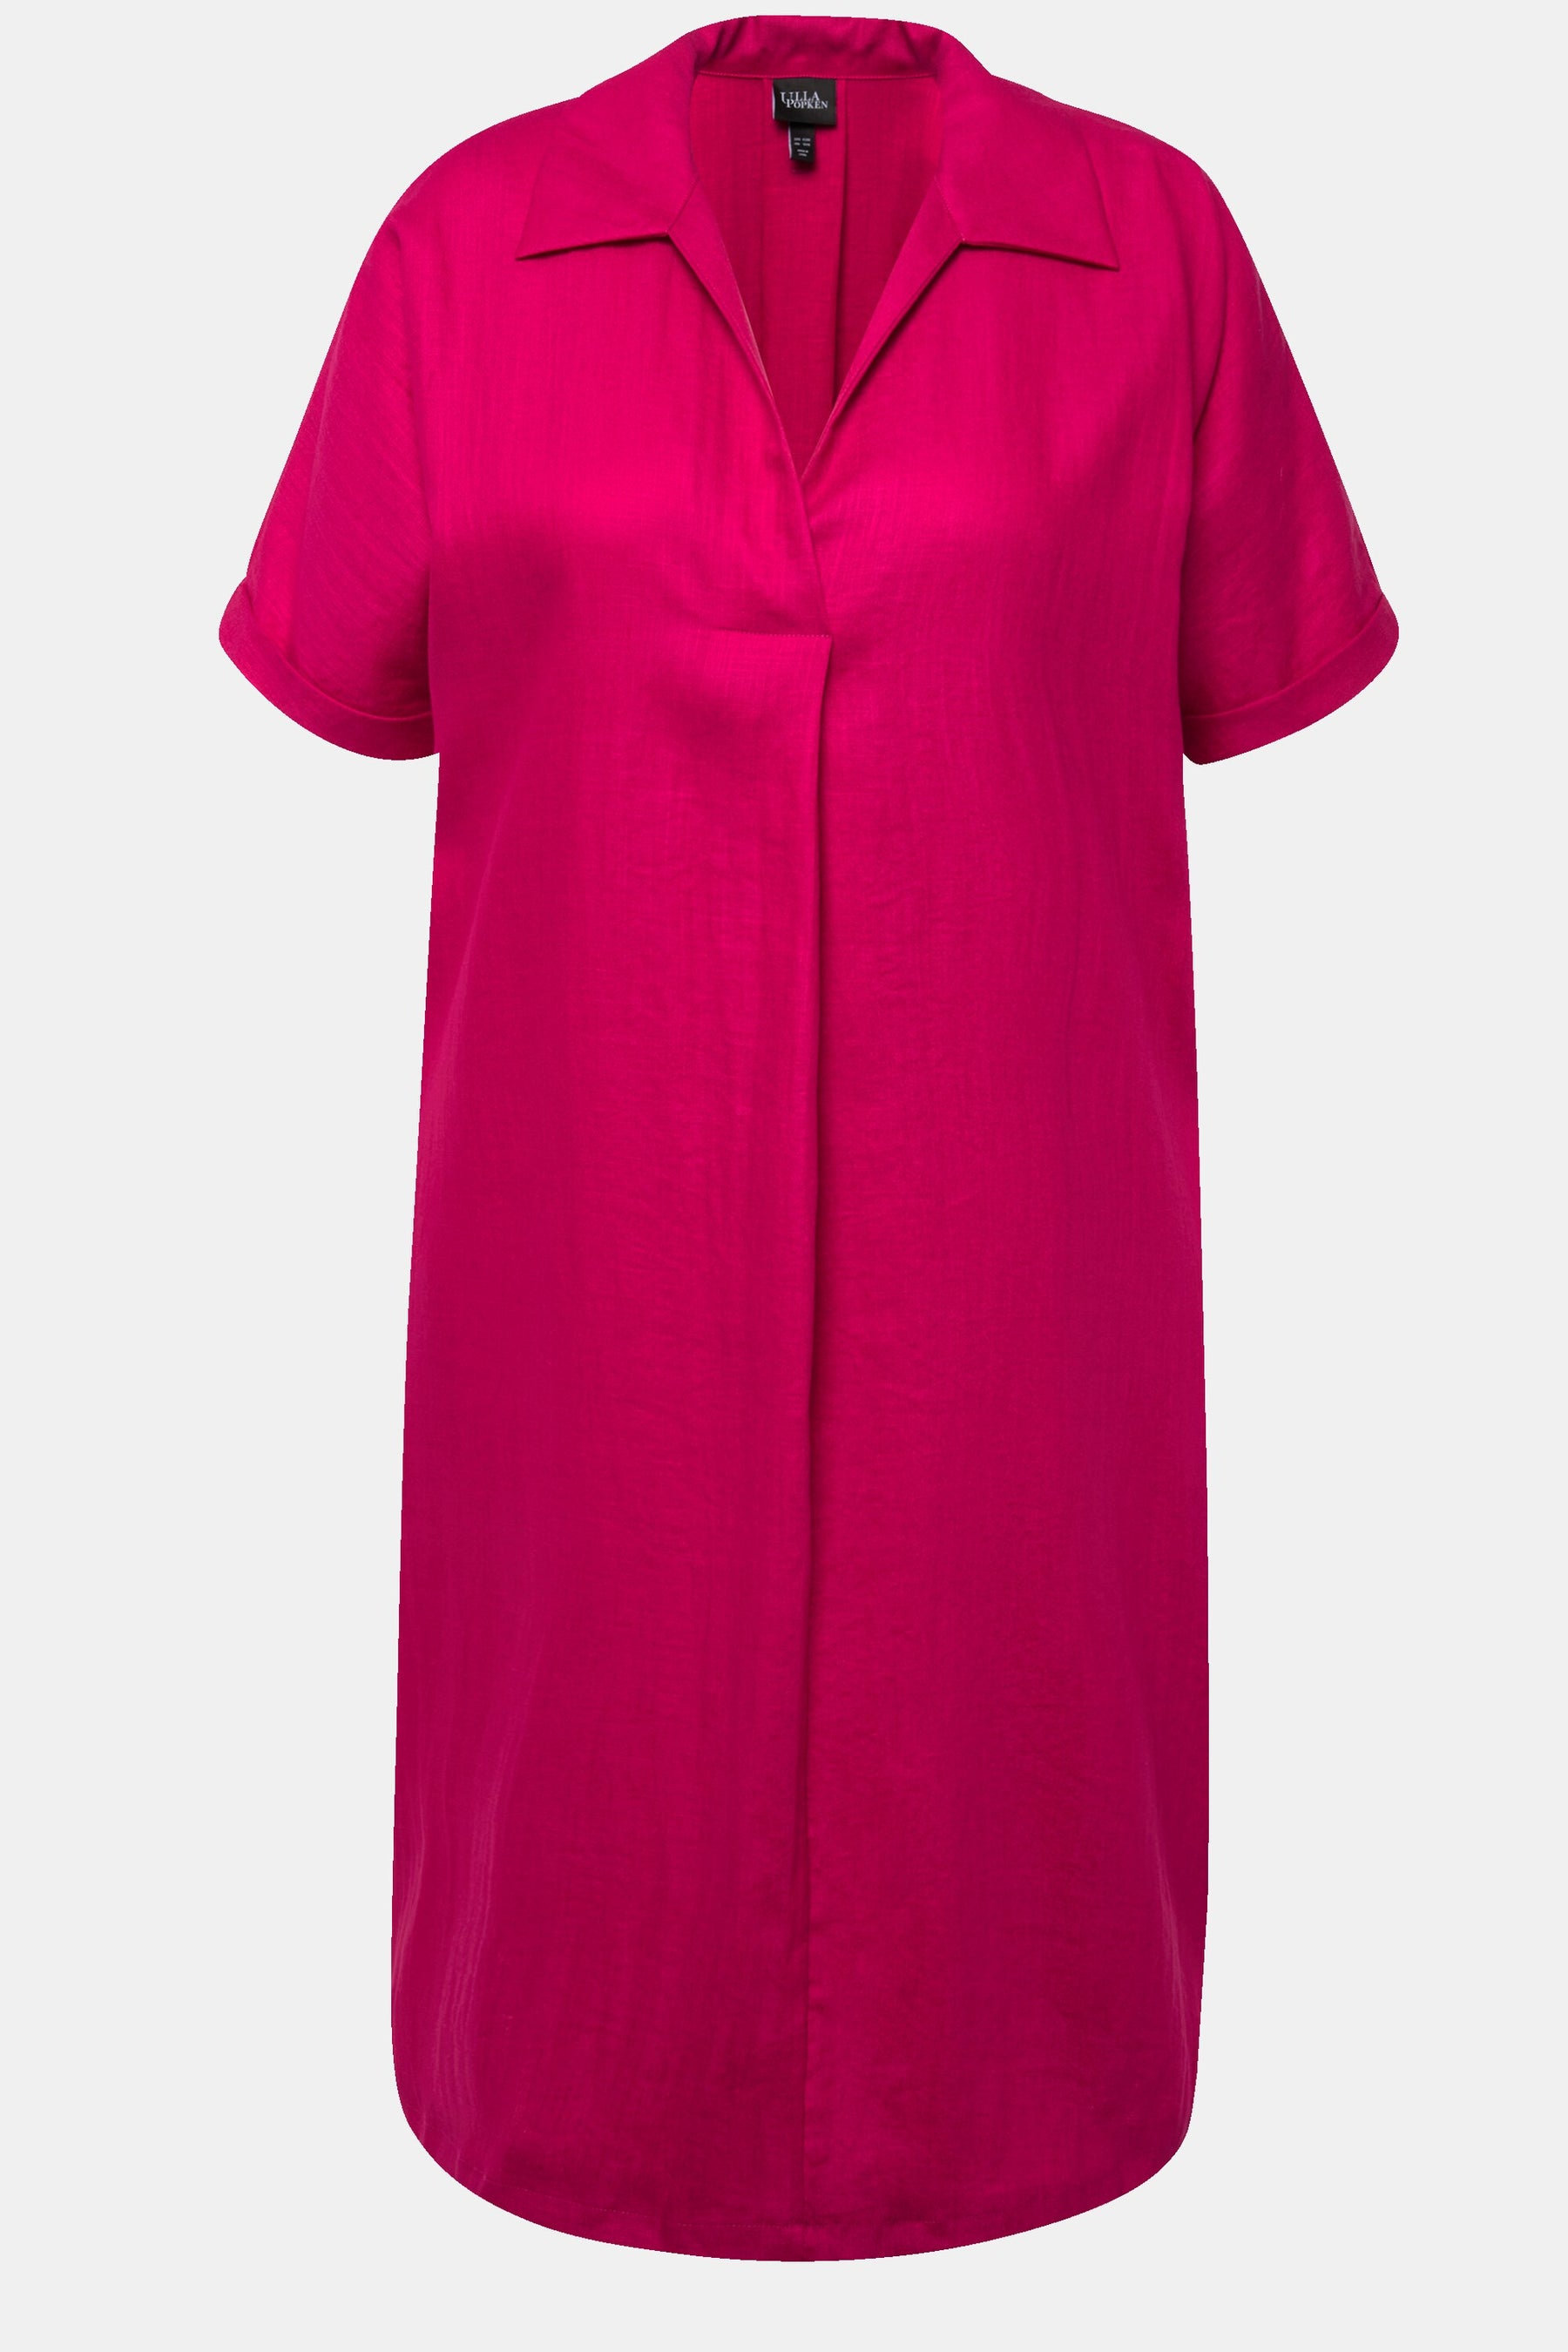 Ulla Popken Collared Pink Dress